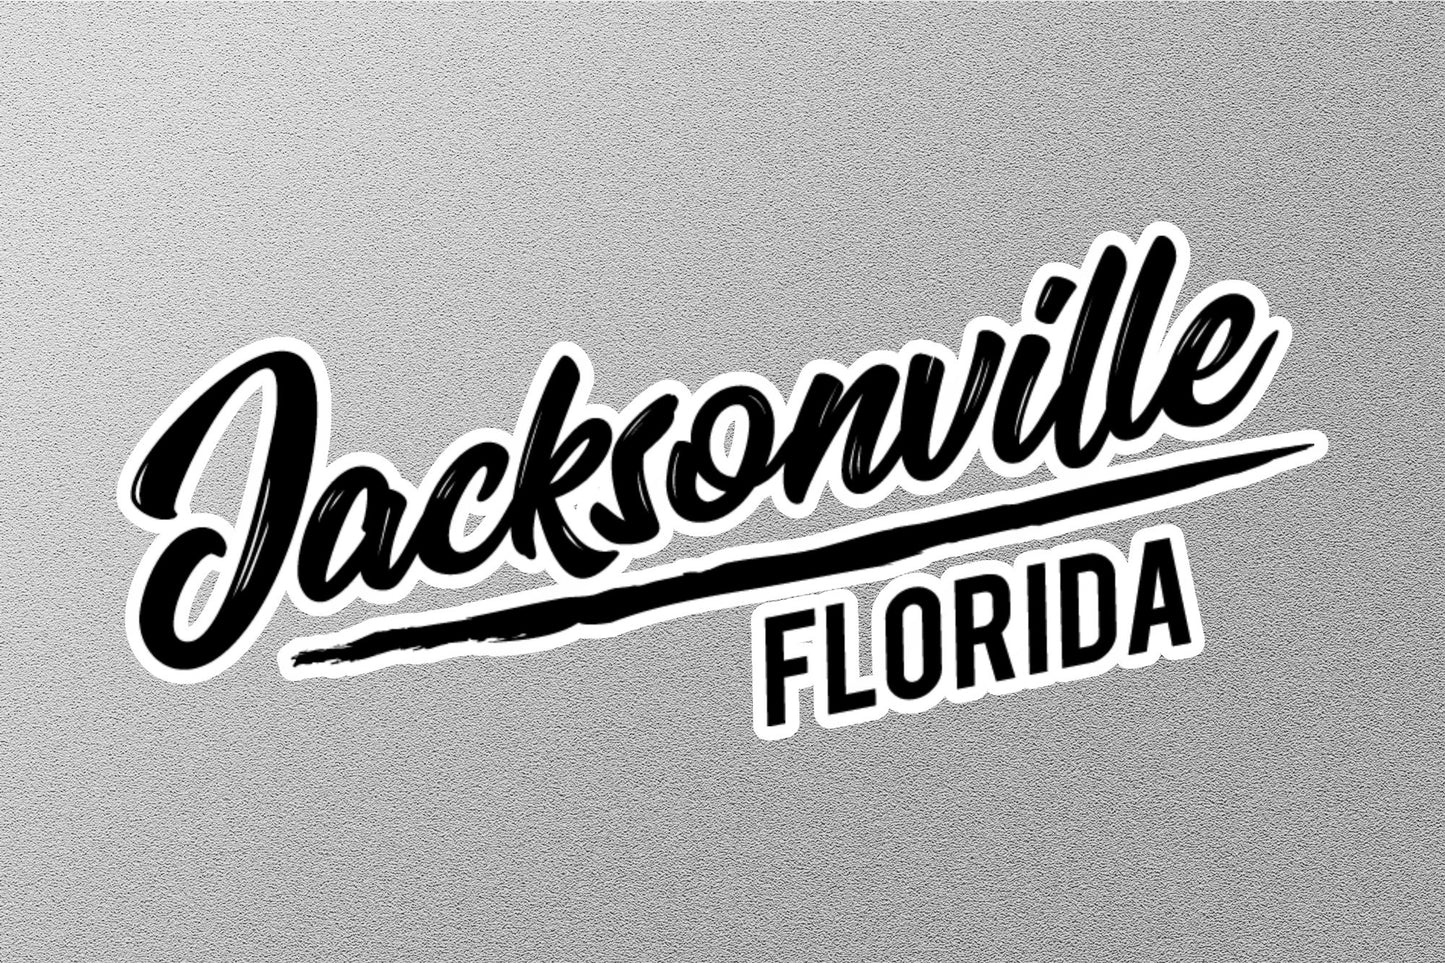 Jacksonville Florida Sticker